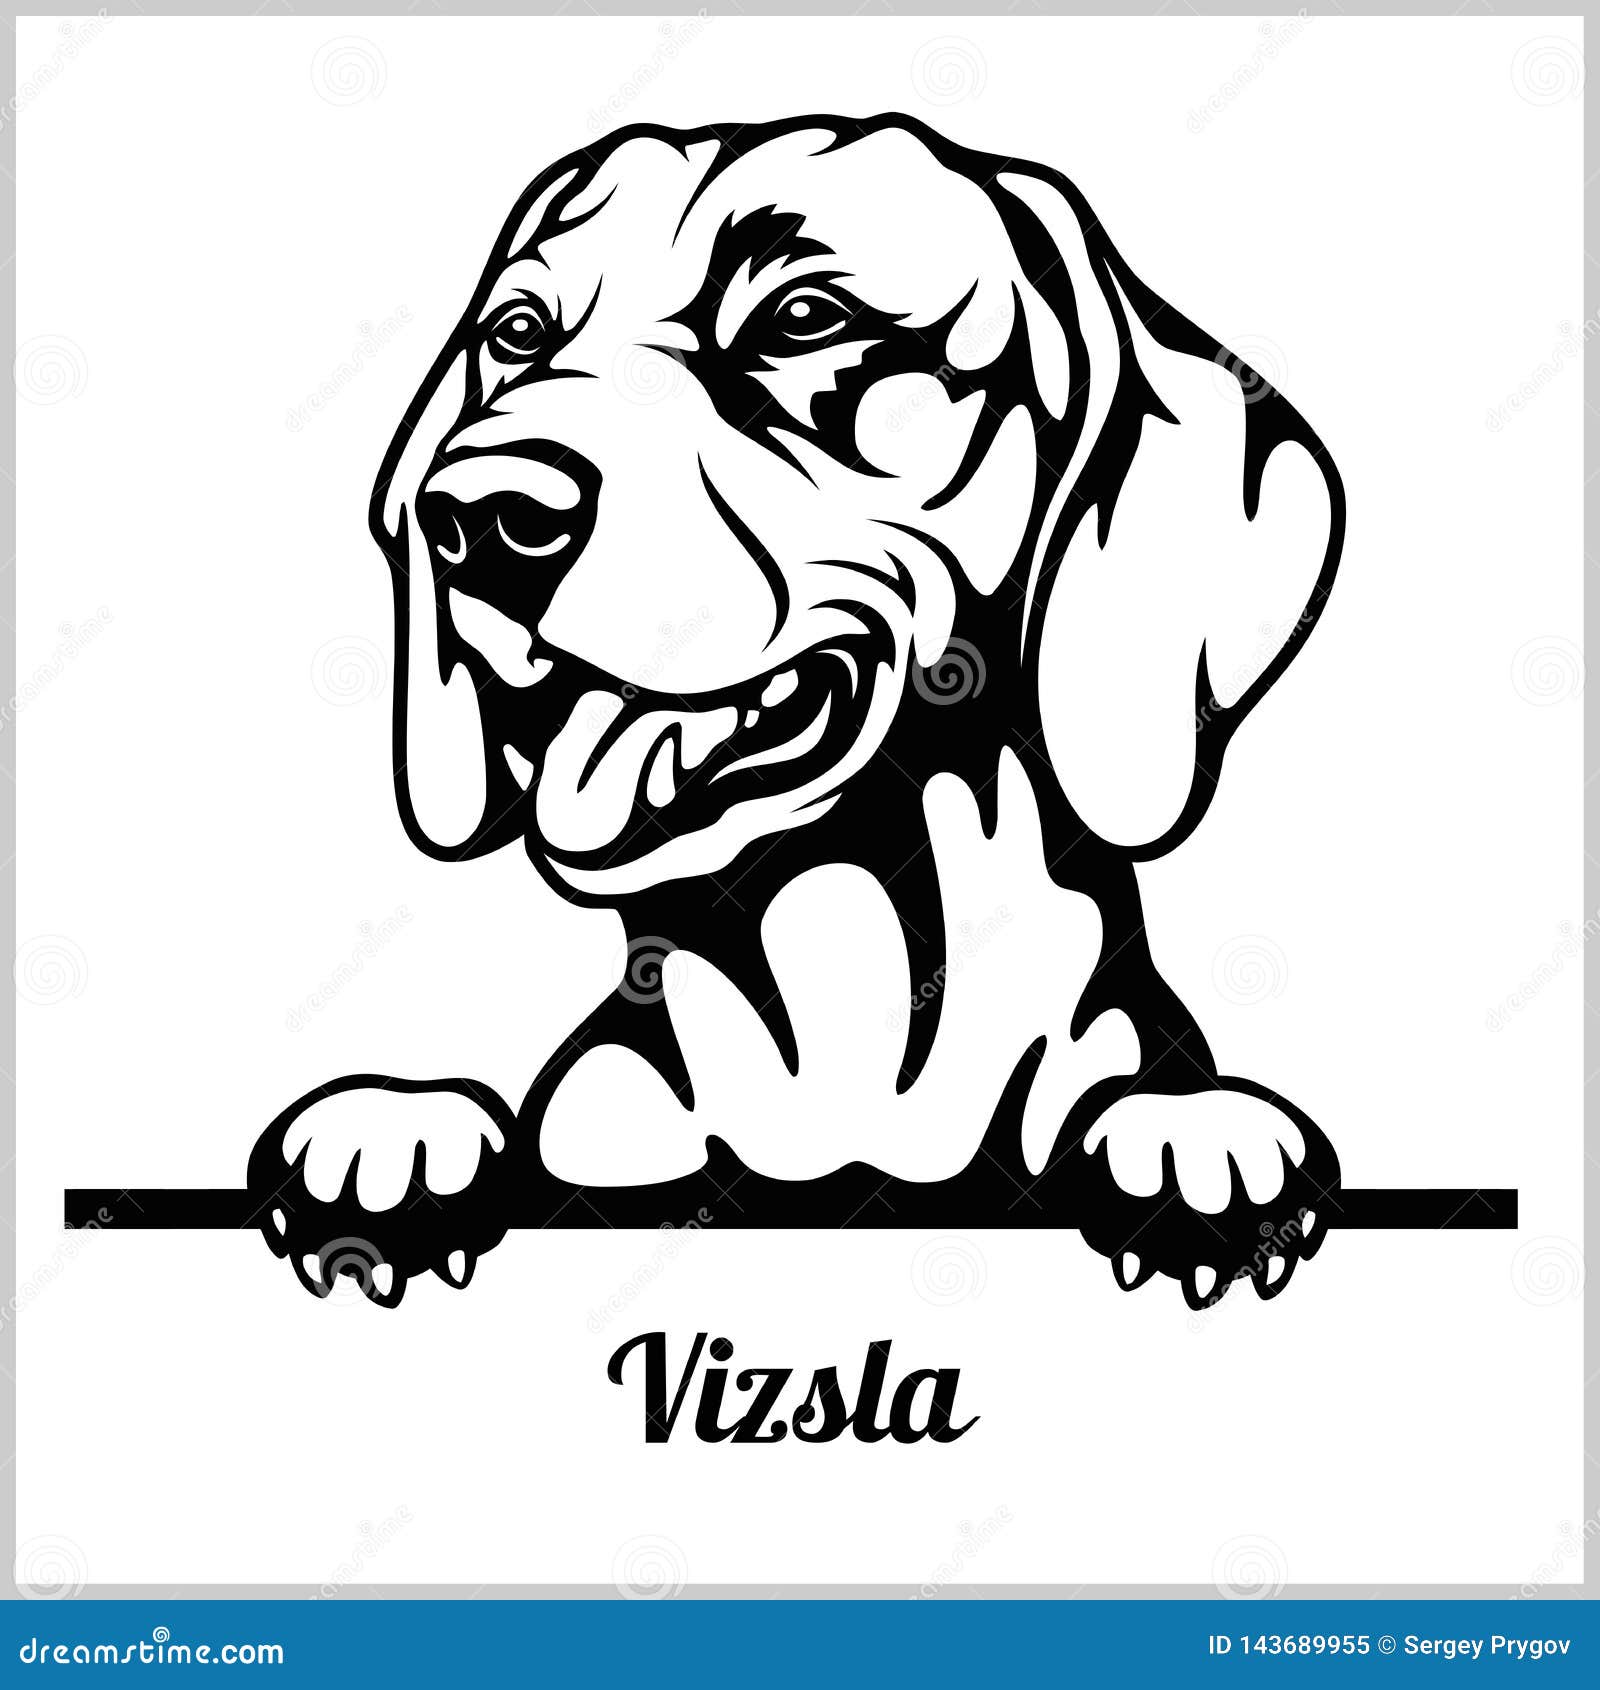 vizsla - peeking dogs - breed face head  on white